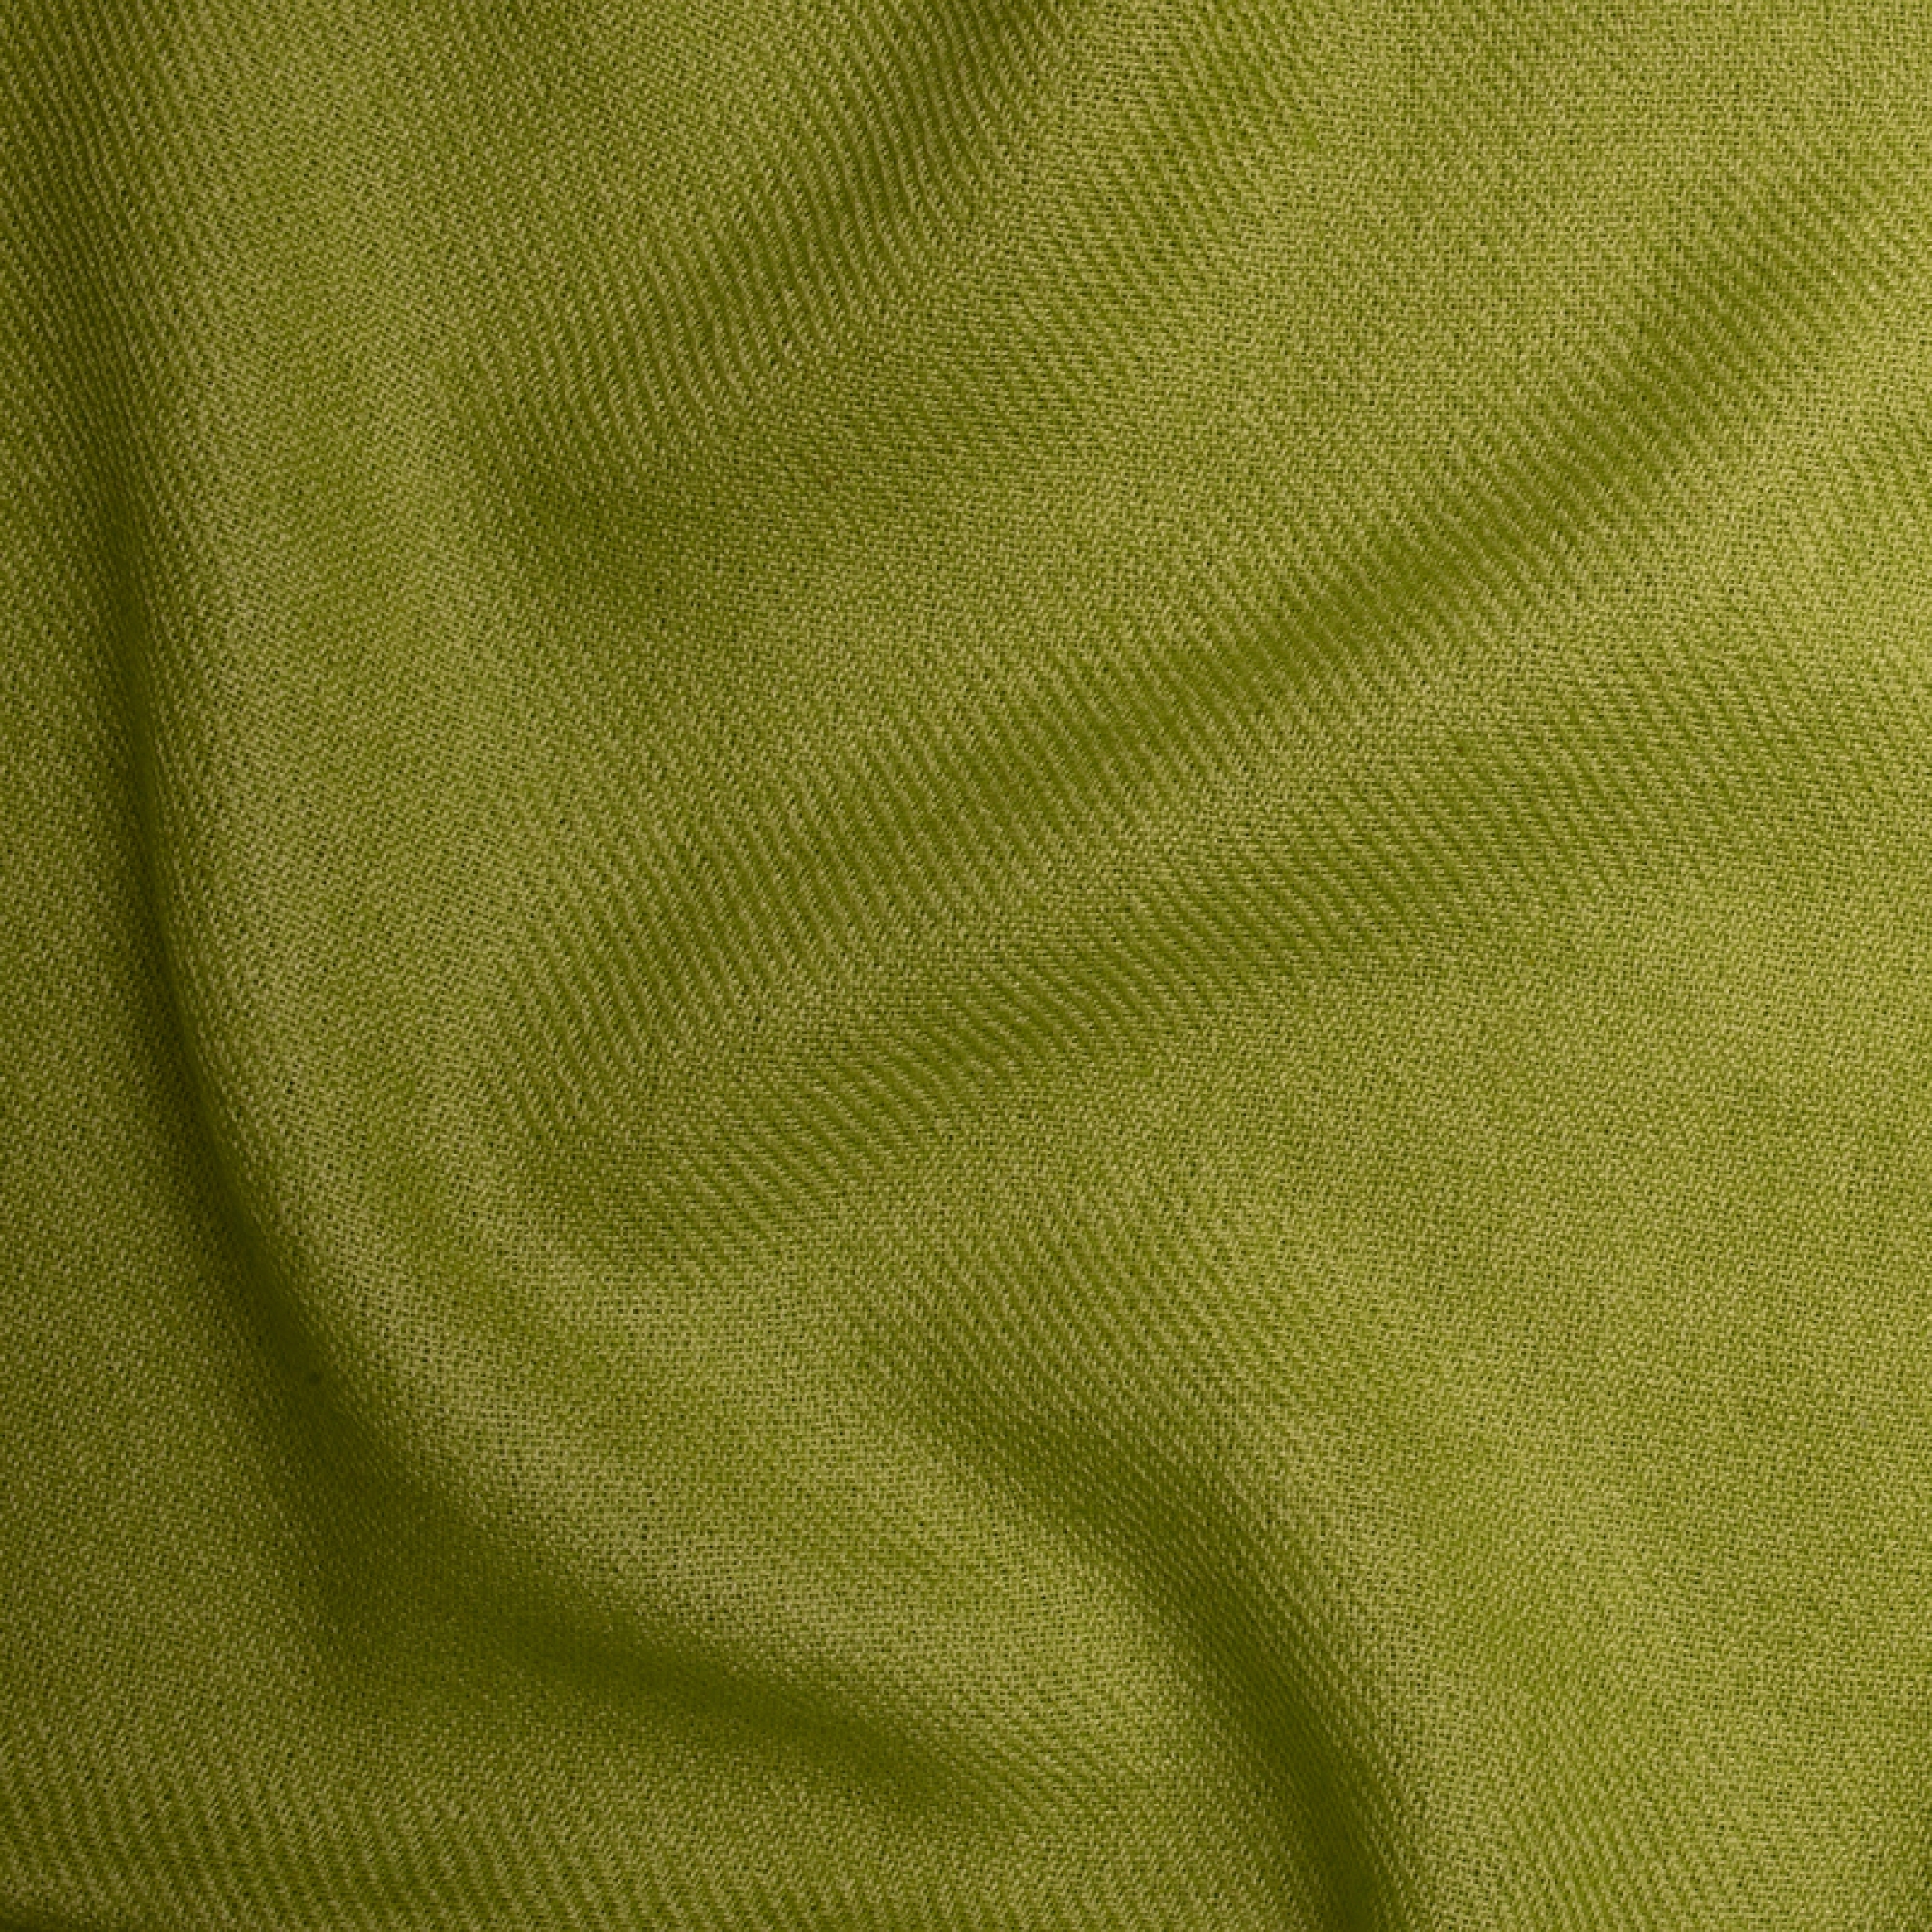 Cashmere accessories blanket toodoo plain m 180 x 220 macaw green 180 x 220 cm